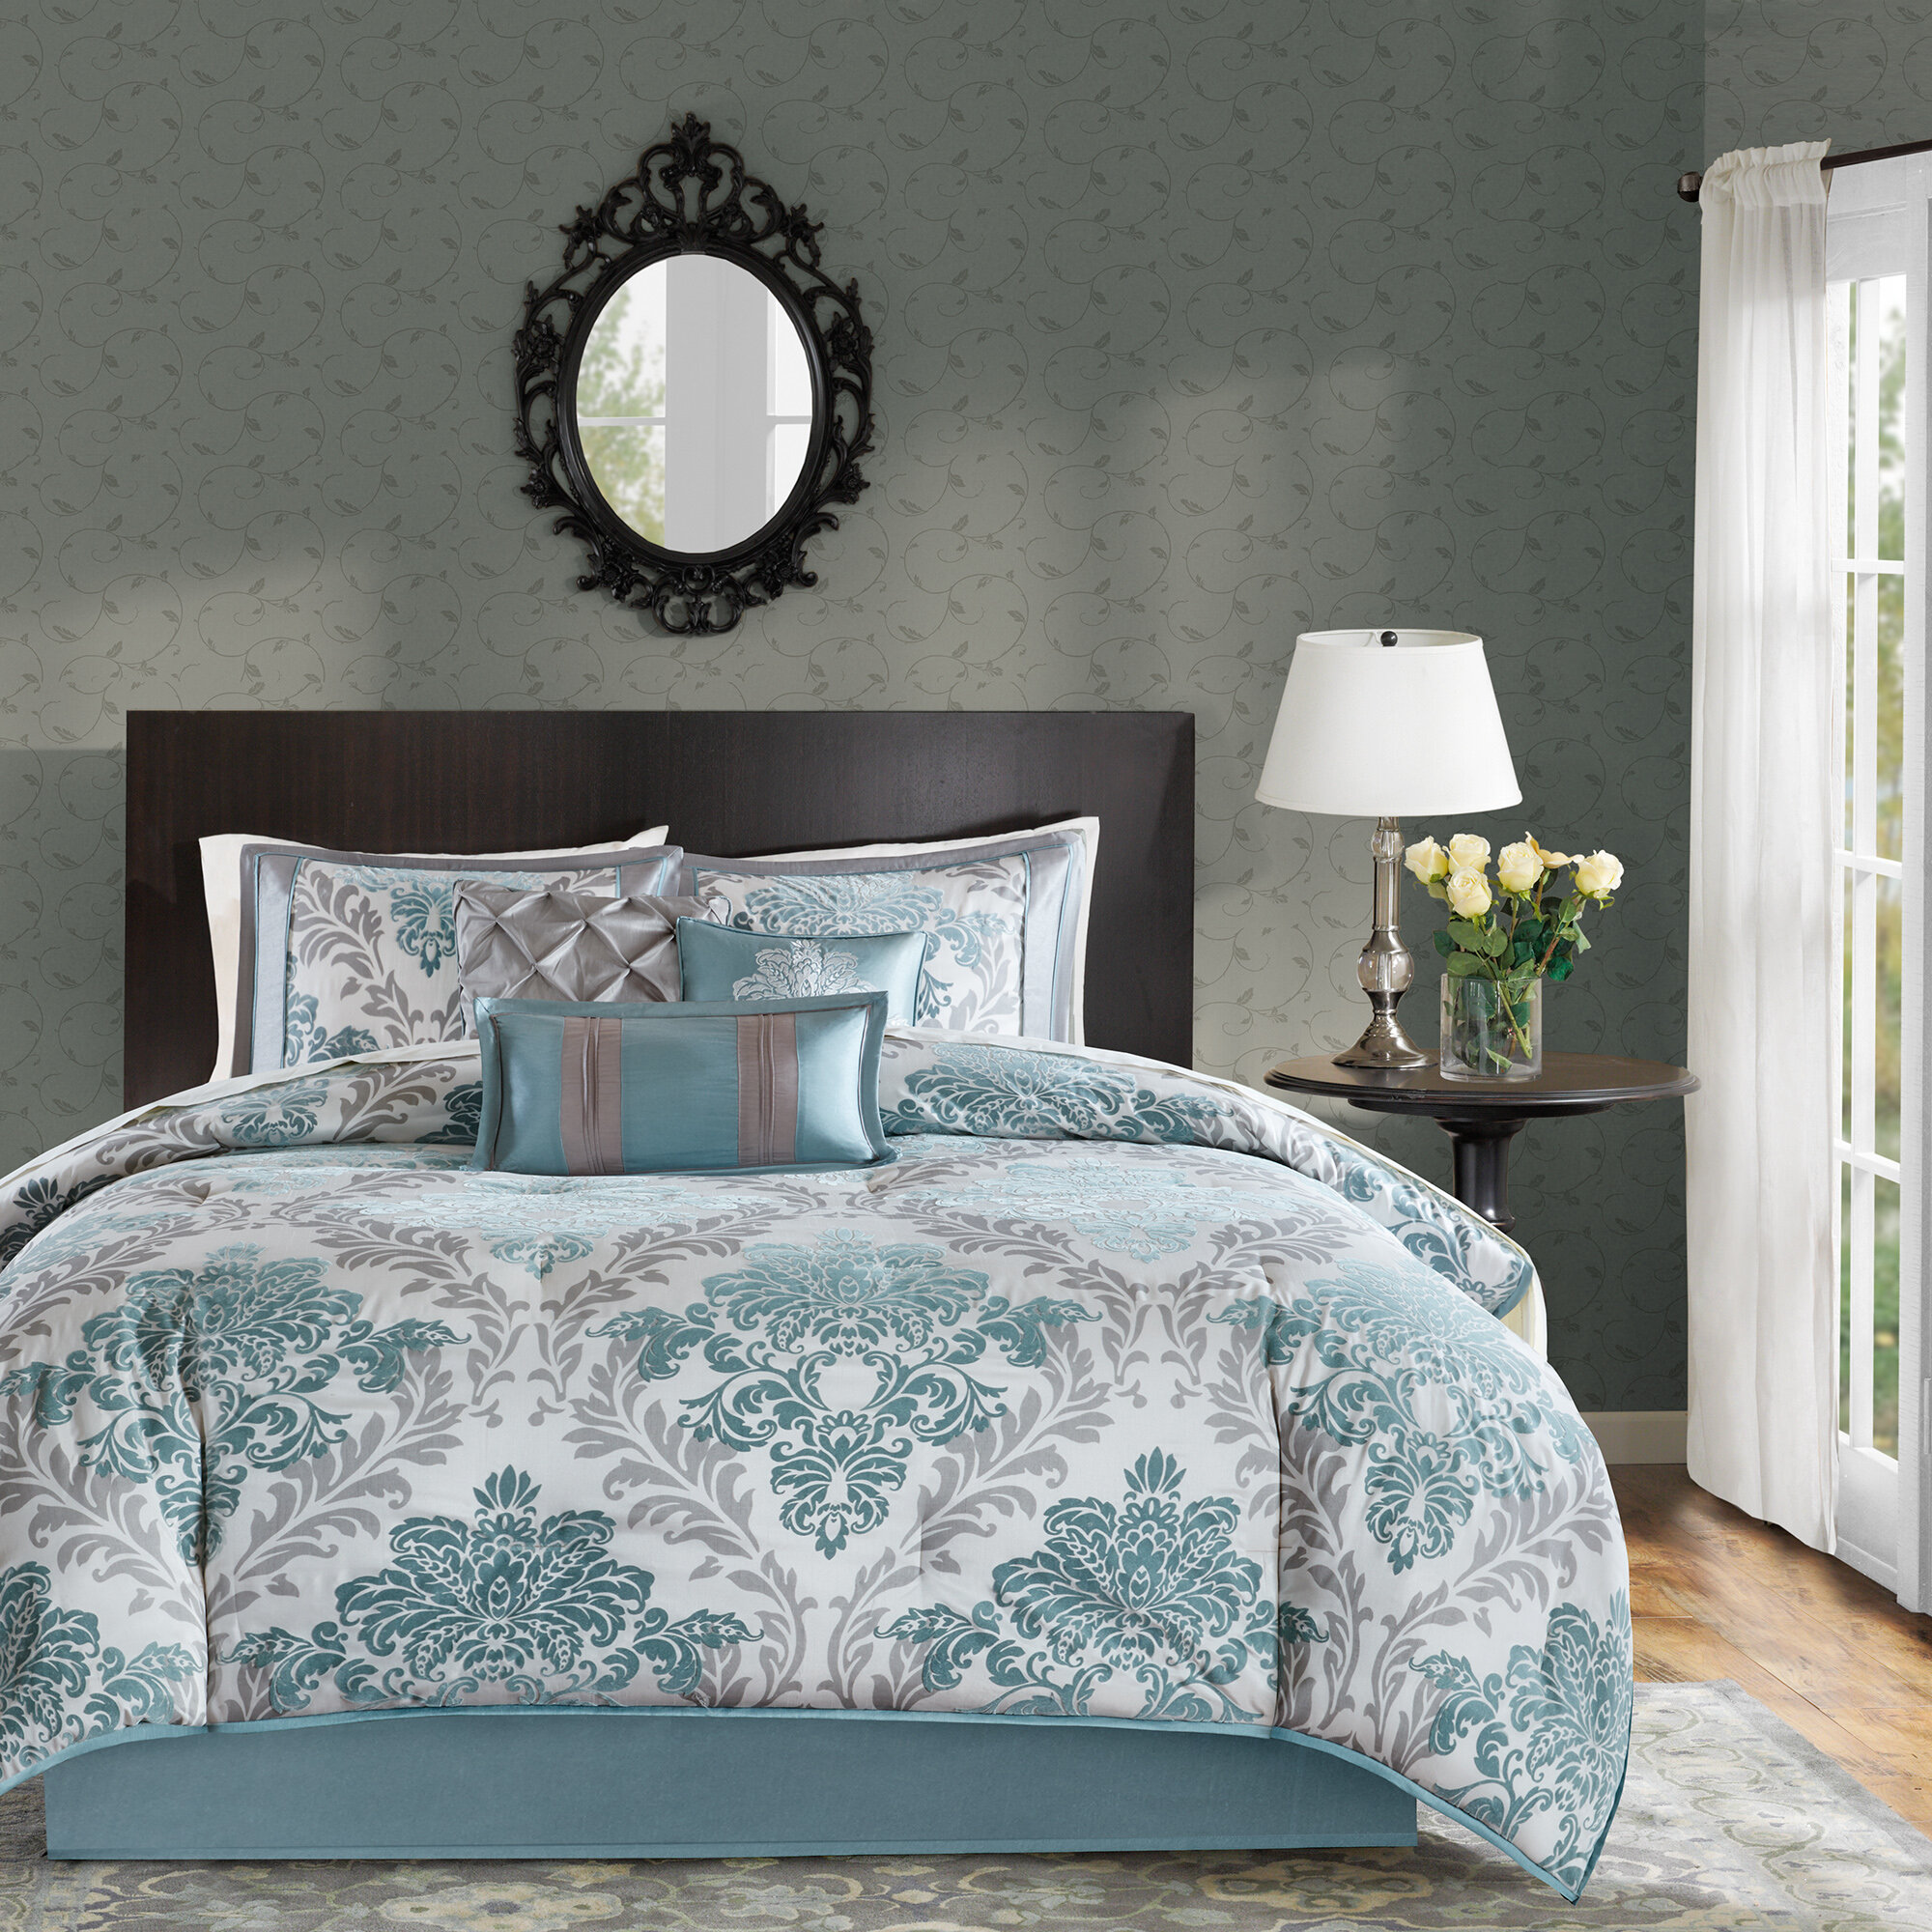 Bedding 7 Pc Blue White Comforter Set Queen Or Cal King Size At Linen Plus Home Garden Snugharborfarm Com